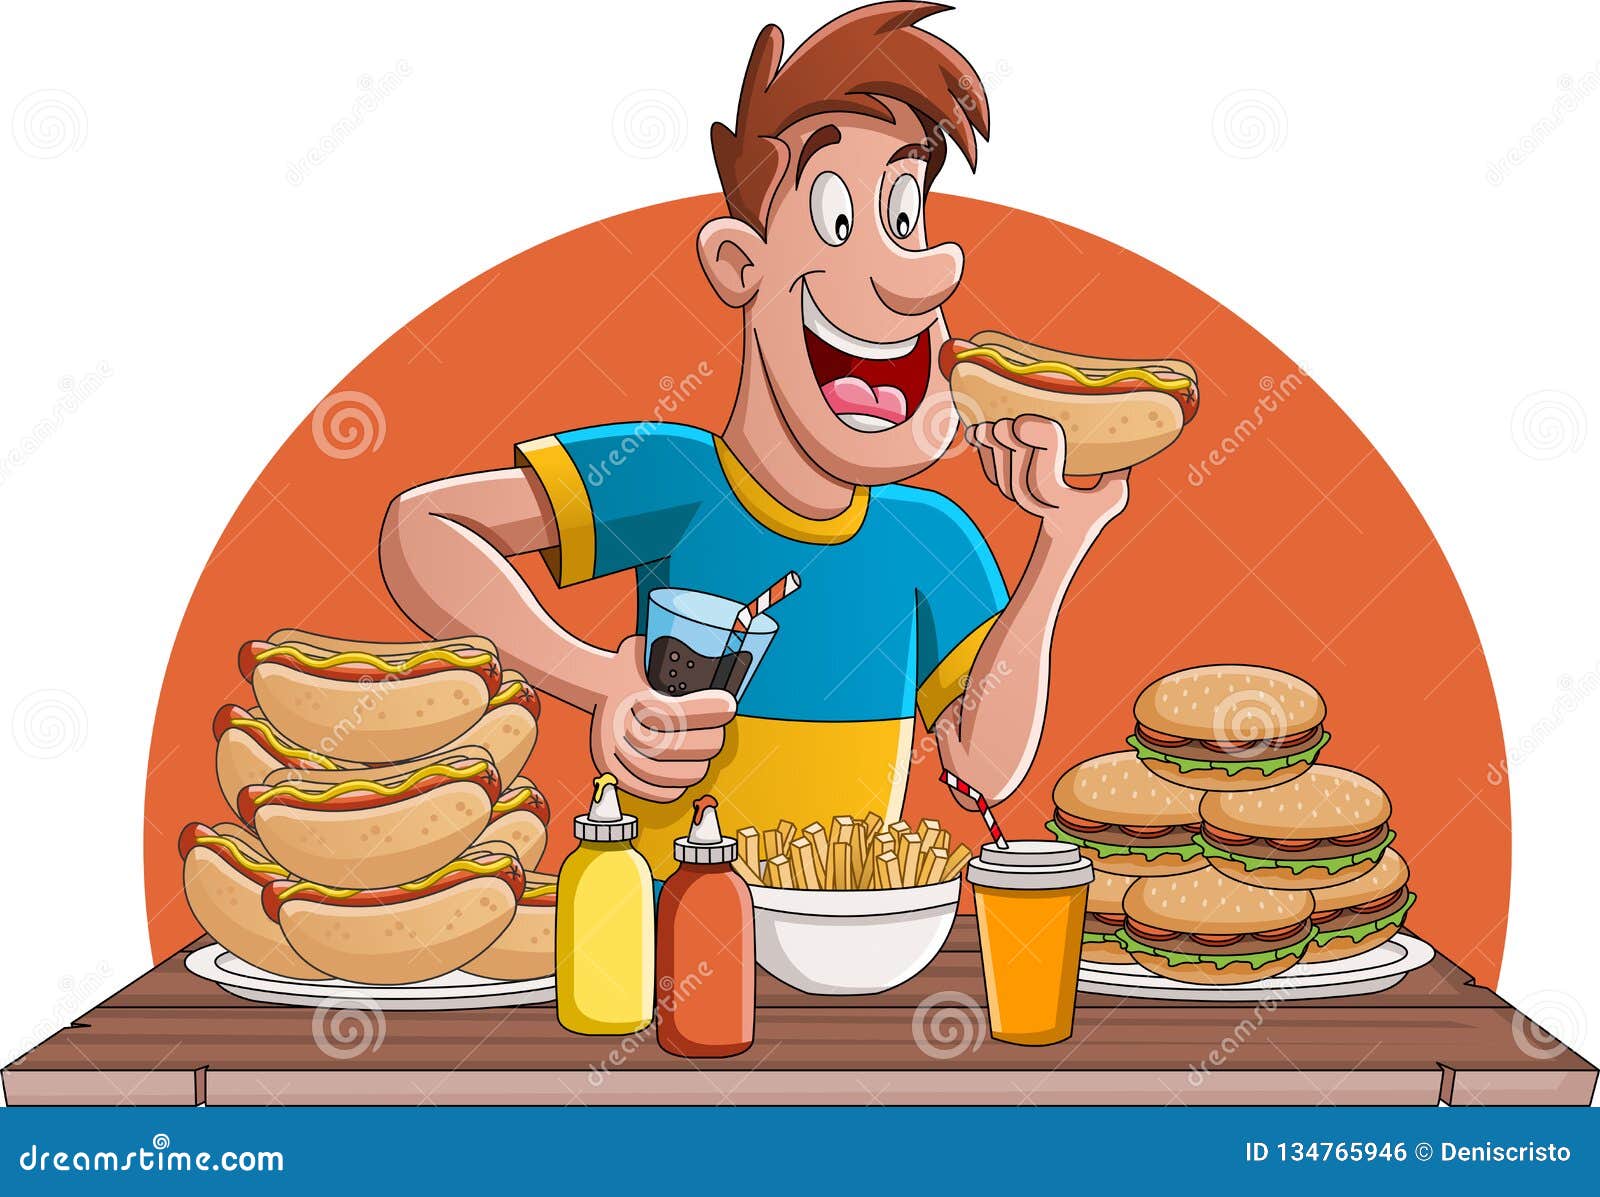 Cartoon Man People Eating Junk Food. Stock Vector - Illustration of couple,  outdoors: 134765946